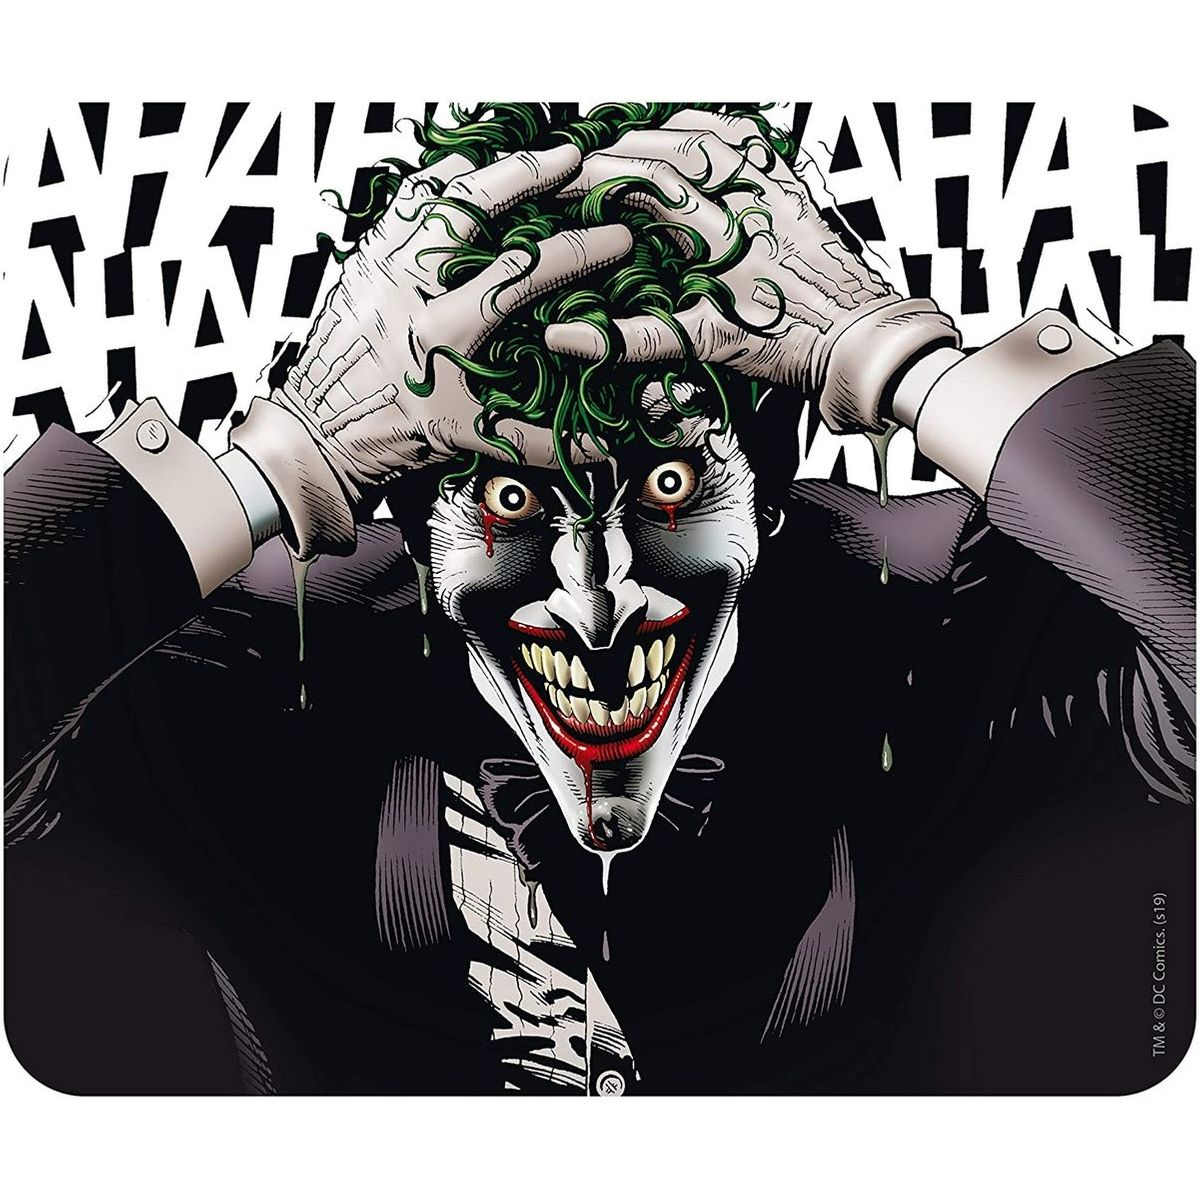 0 Joker Gesicht mm mm) ABYSTYLE (0 Mauspad x Gaming